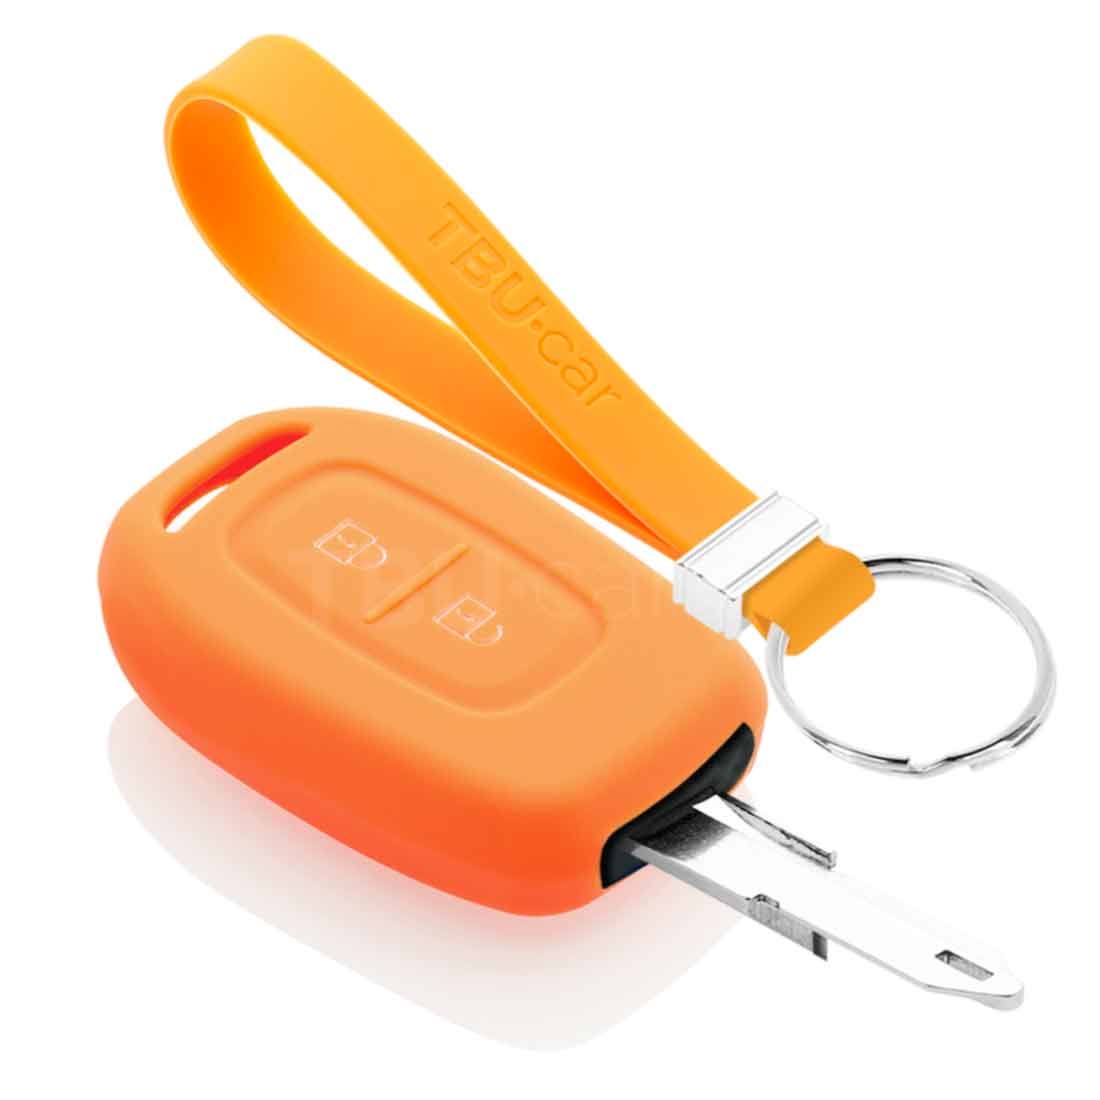 TBU car TBU car Autoschlüssel Hülle kompatibel mit Dacia 2 Tasten - Schutzhülle aus Silikon - Auto Schlüsselhülle Cover in Orange